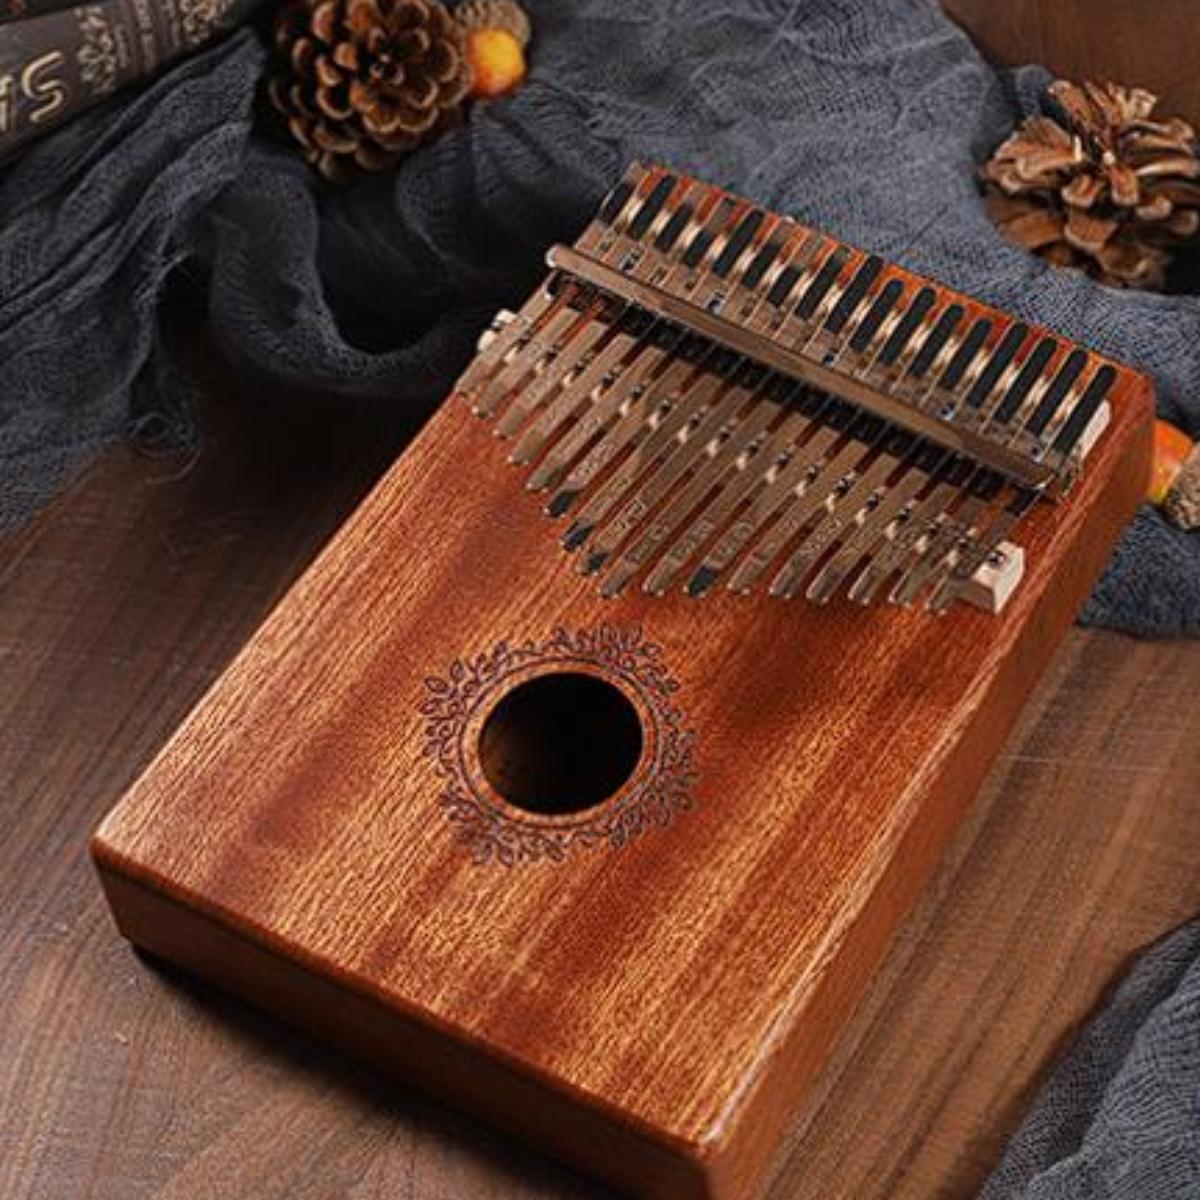 SHEIN 1pc 17 Keys Kalimba Thumb Piano Wood Mbira Body Musical Instruments With Learning Book Kalimba Piano Gift Rust Brown one-size